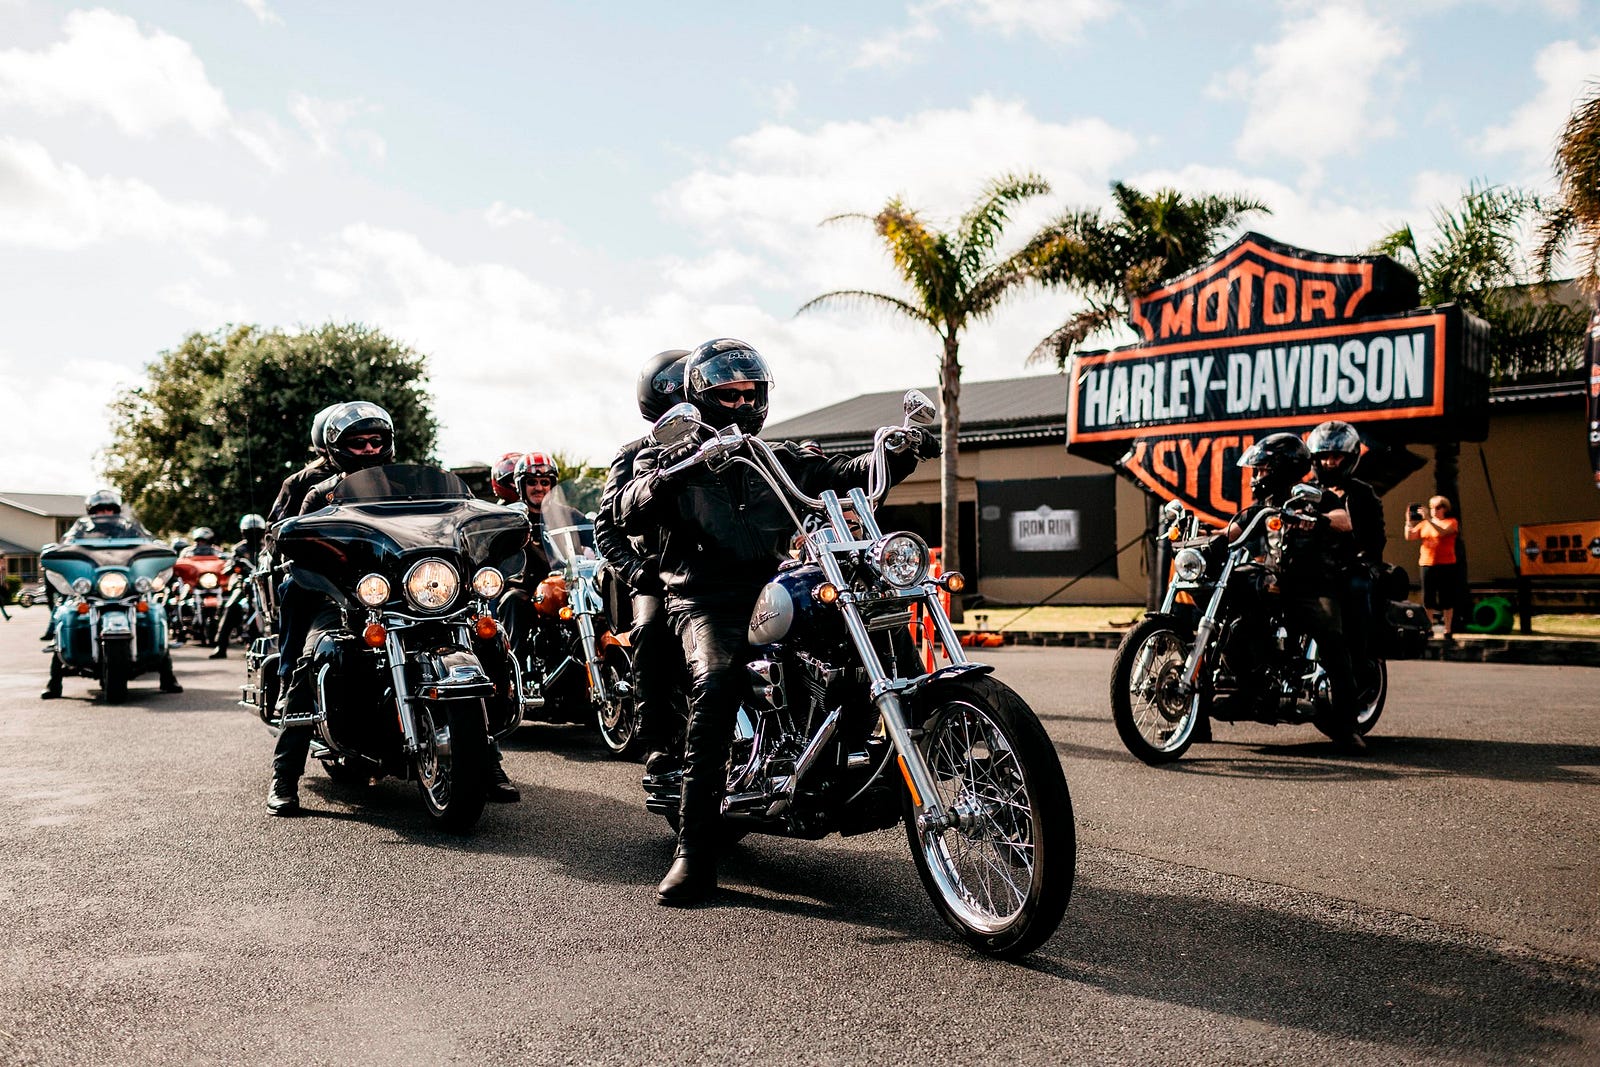 Keep your motor running: The Harley Davidson brand story…